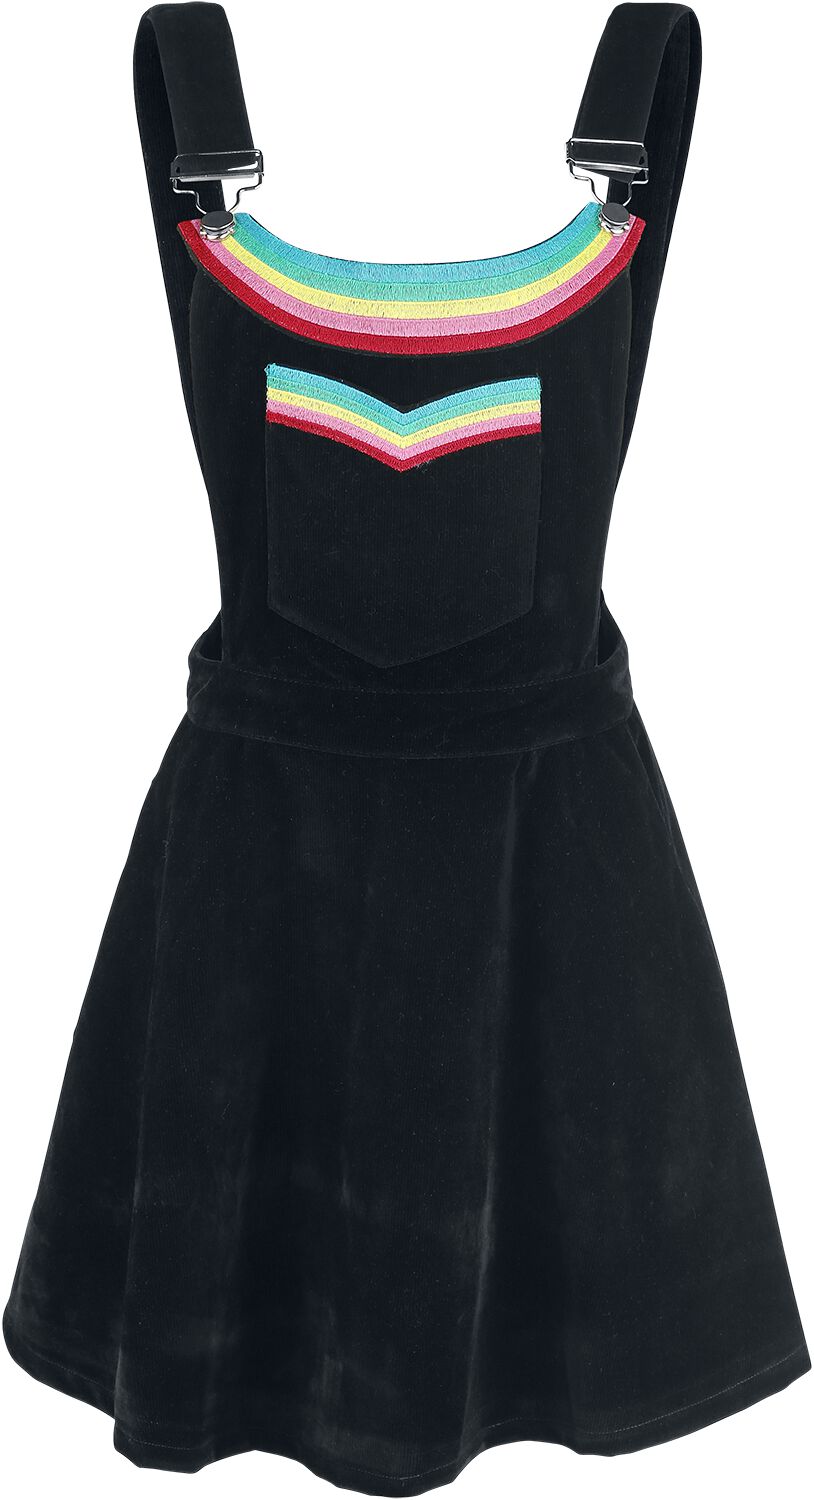 Jawbreaker Double Rainbow Dress Kurzes Kleid schwarz